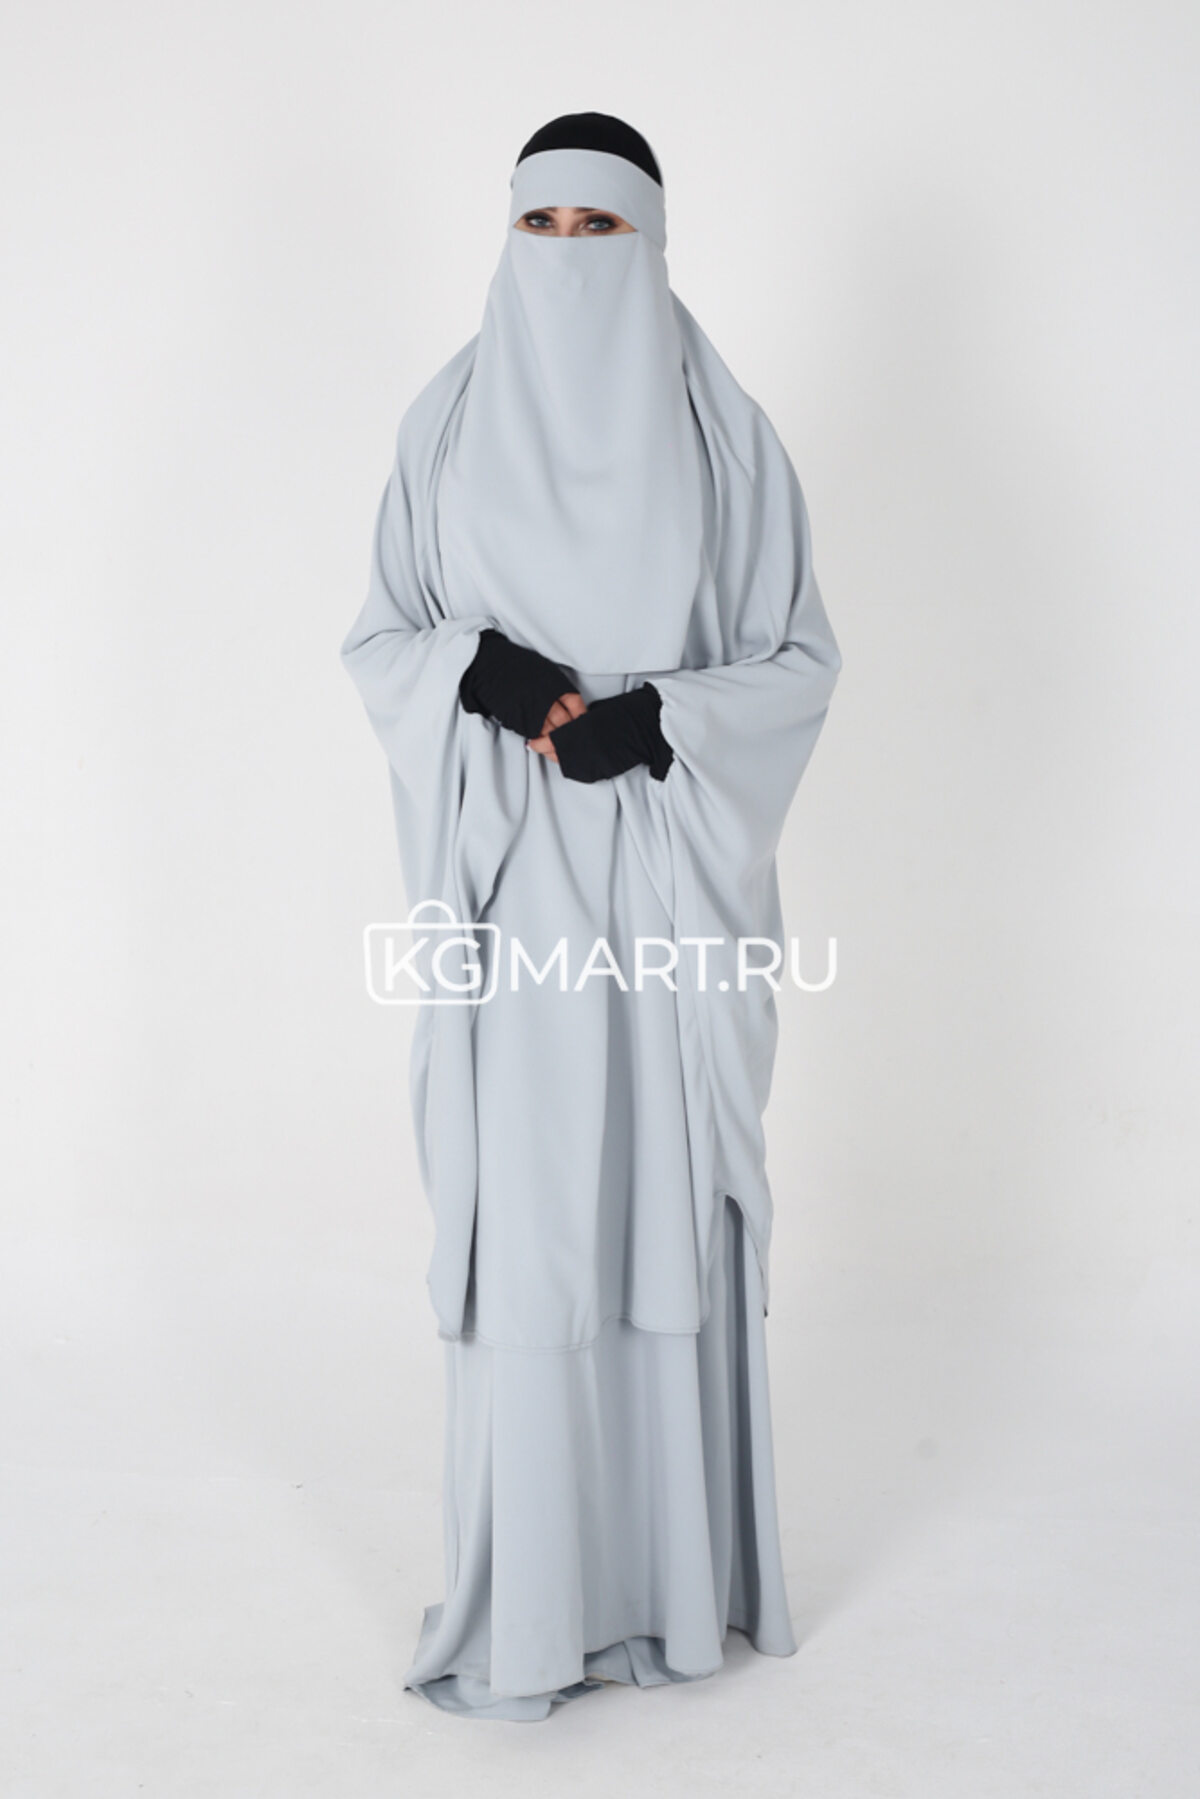 Мусульманская одежда, хиджаб арт.294916